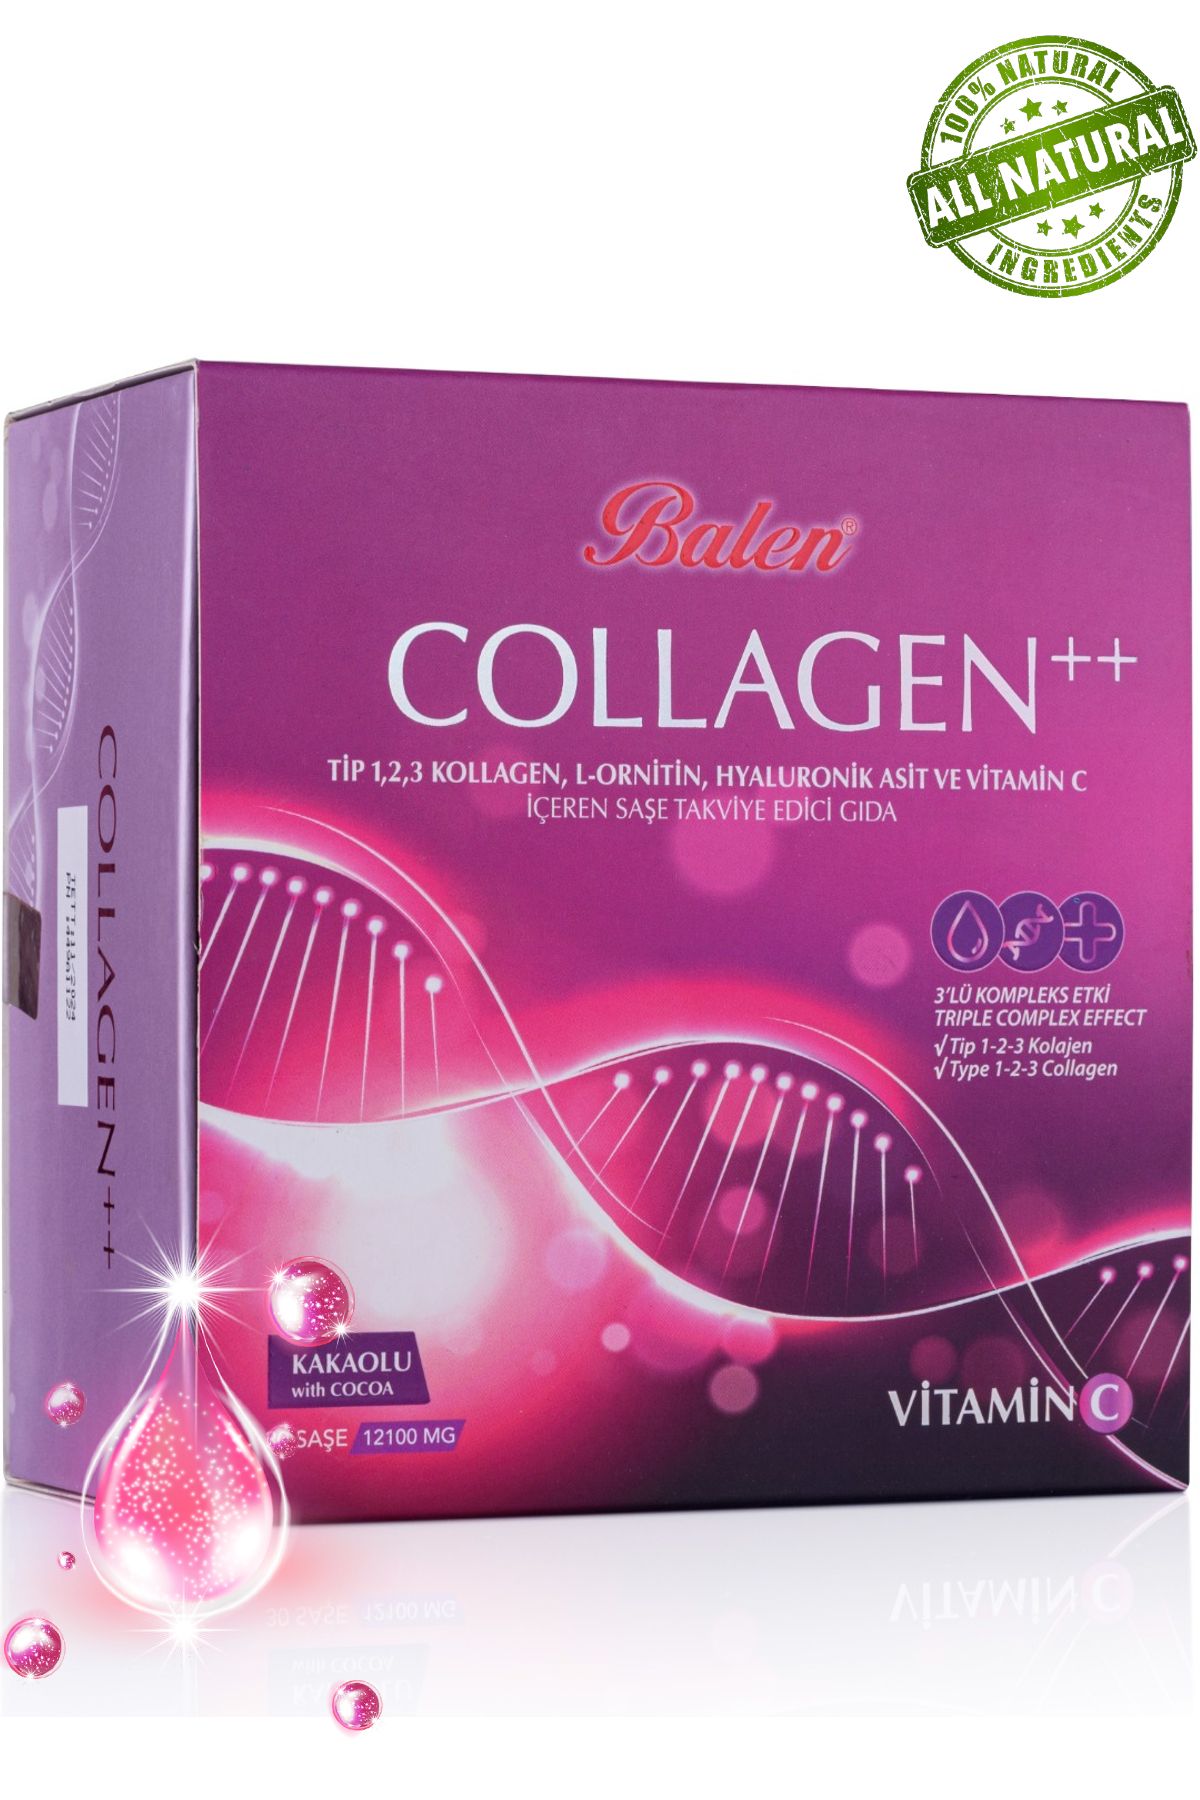 Balen Collagen Complex++ Tip 1, 2, 3 Kollajen, L-Ornitin, Hyal. Asit, Vitamin C Şase Kakaolu